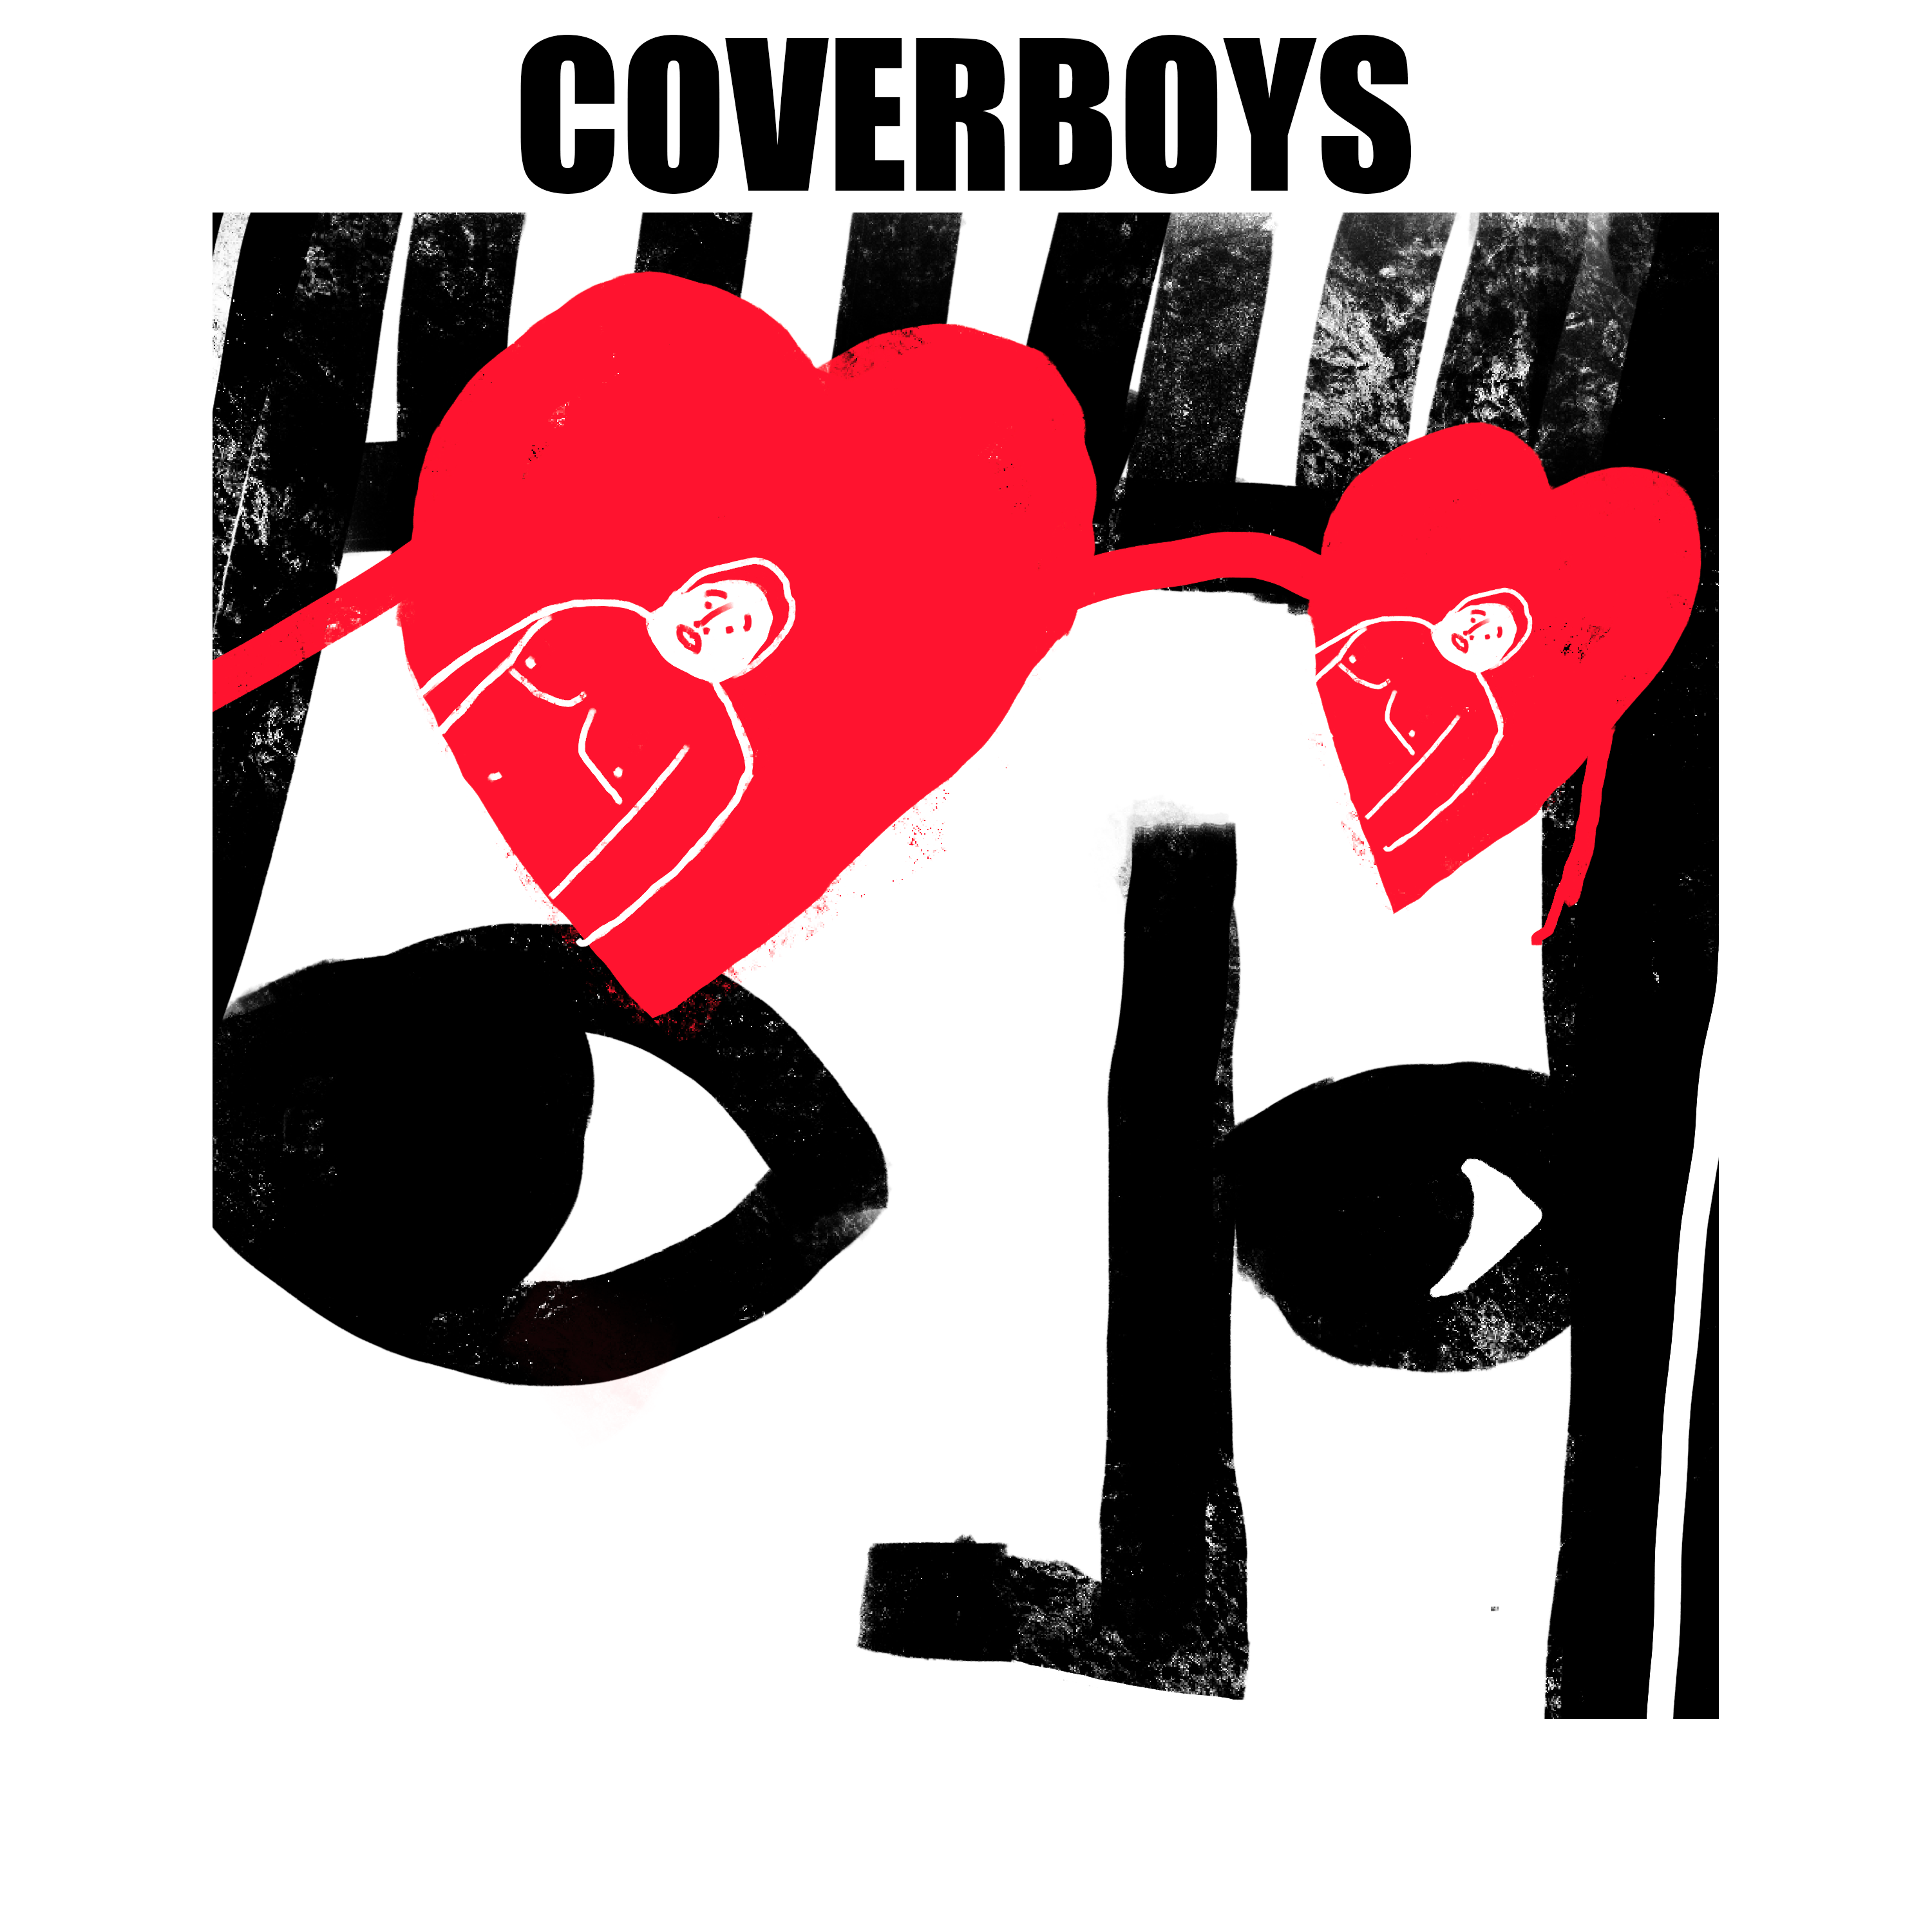 Thumbnail for "Bonus: Other Men Need Help:  Cover Boys".